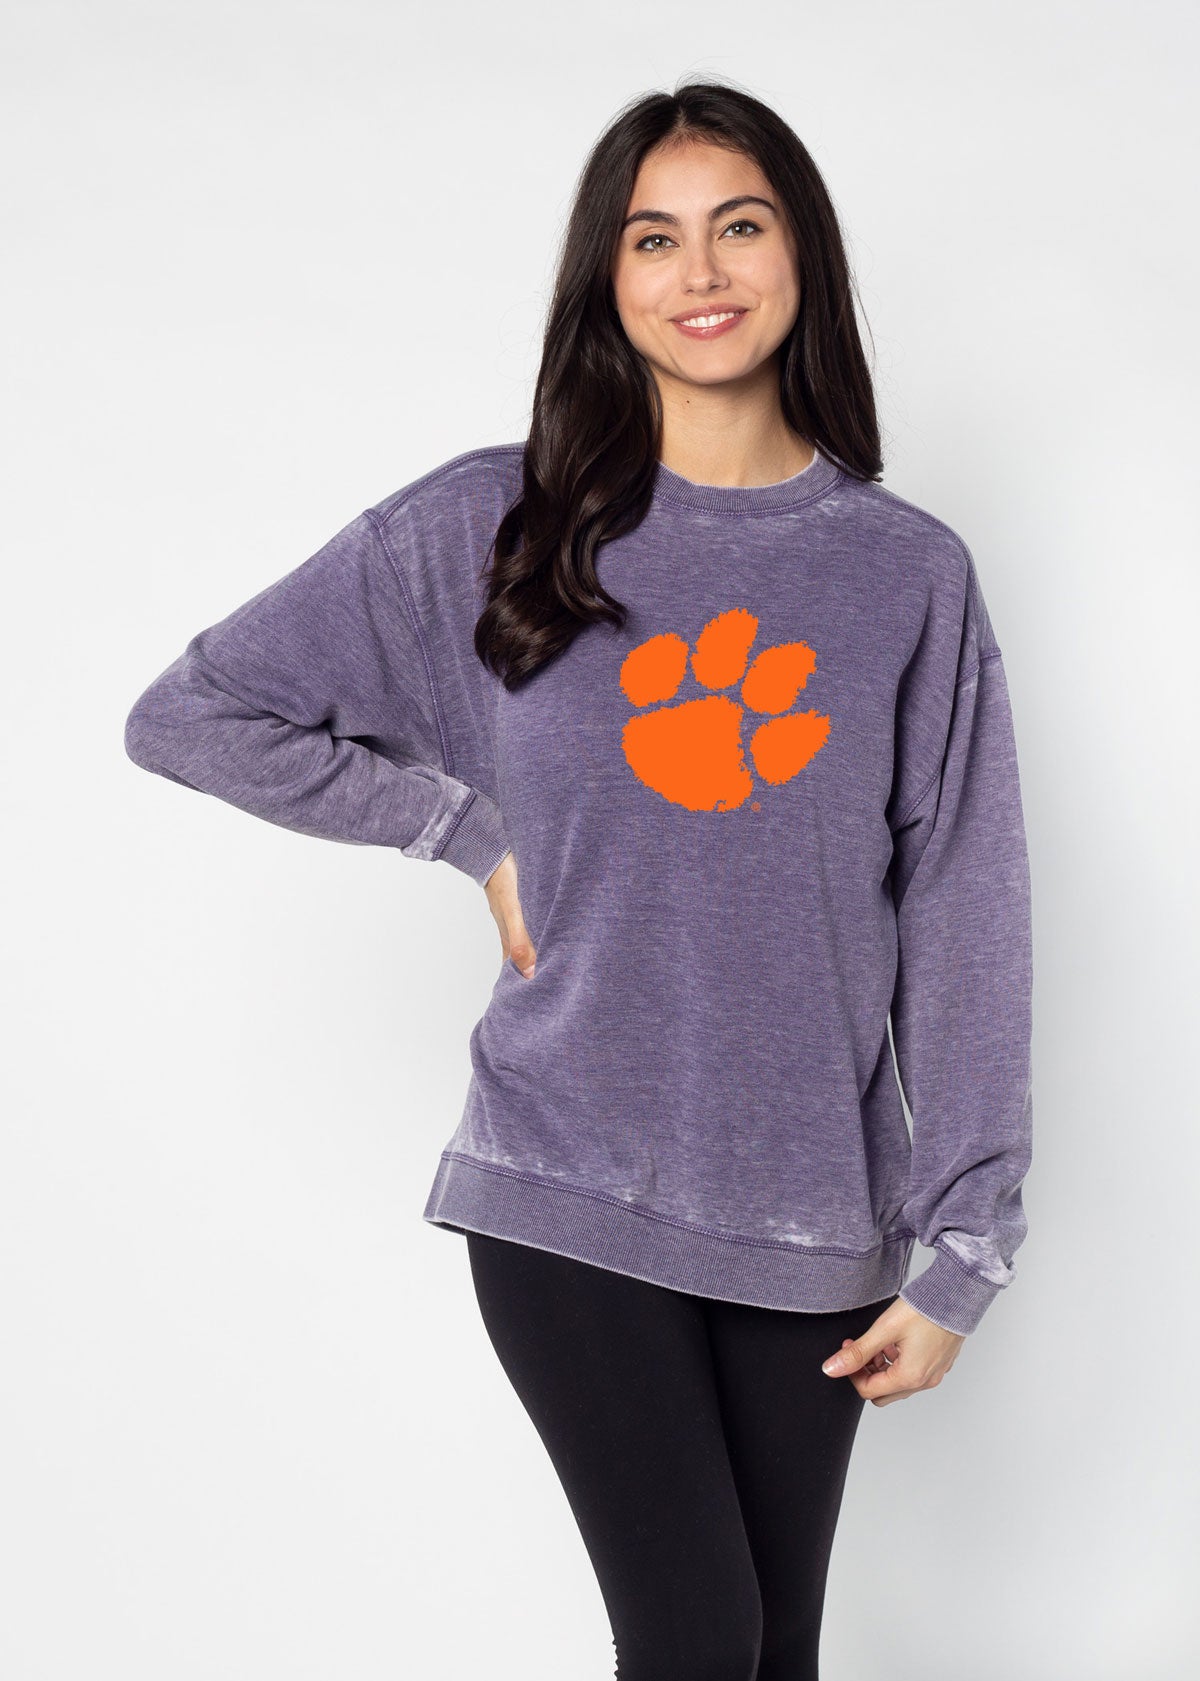 Campus Crew Sweatshirt Clemson Tigers in Grape